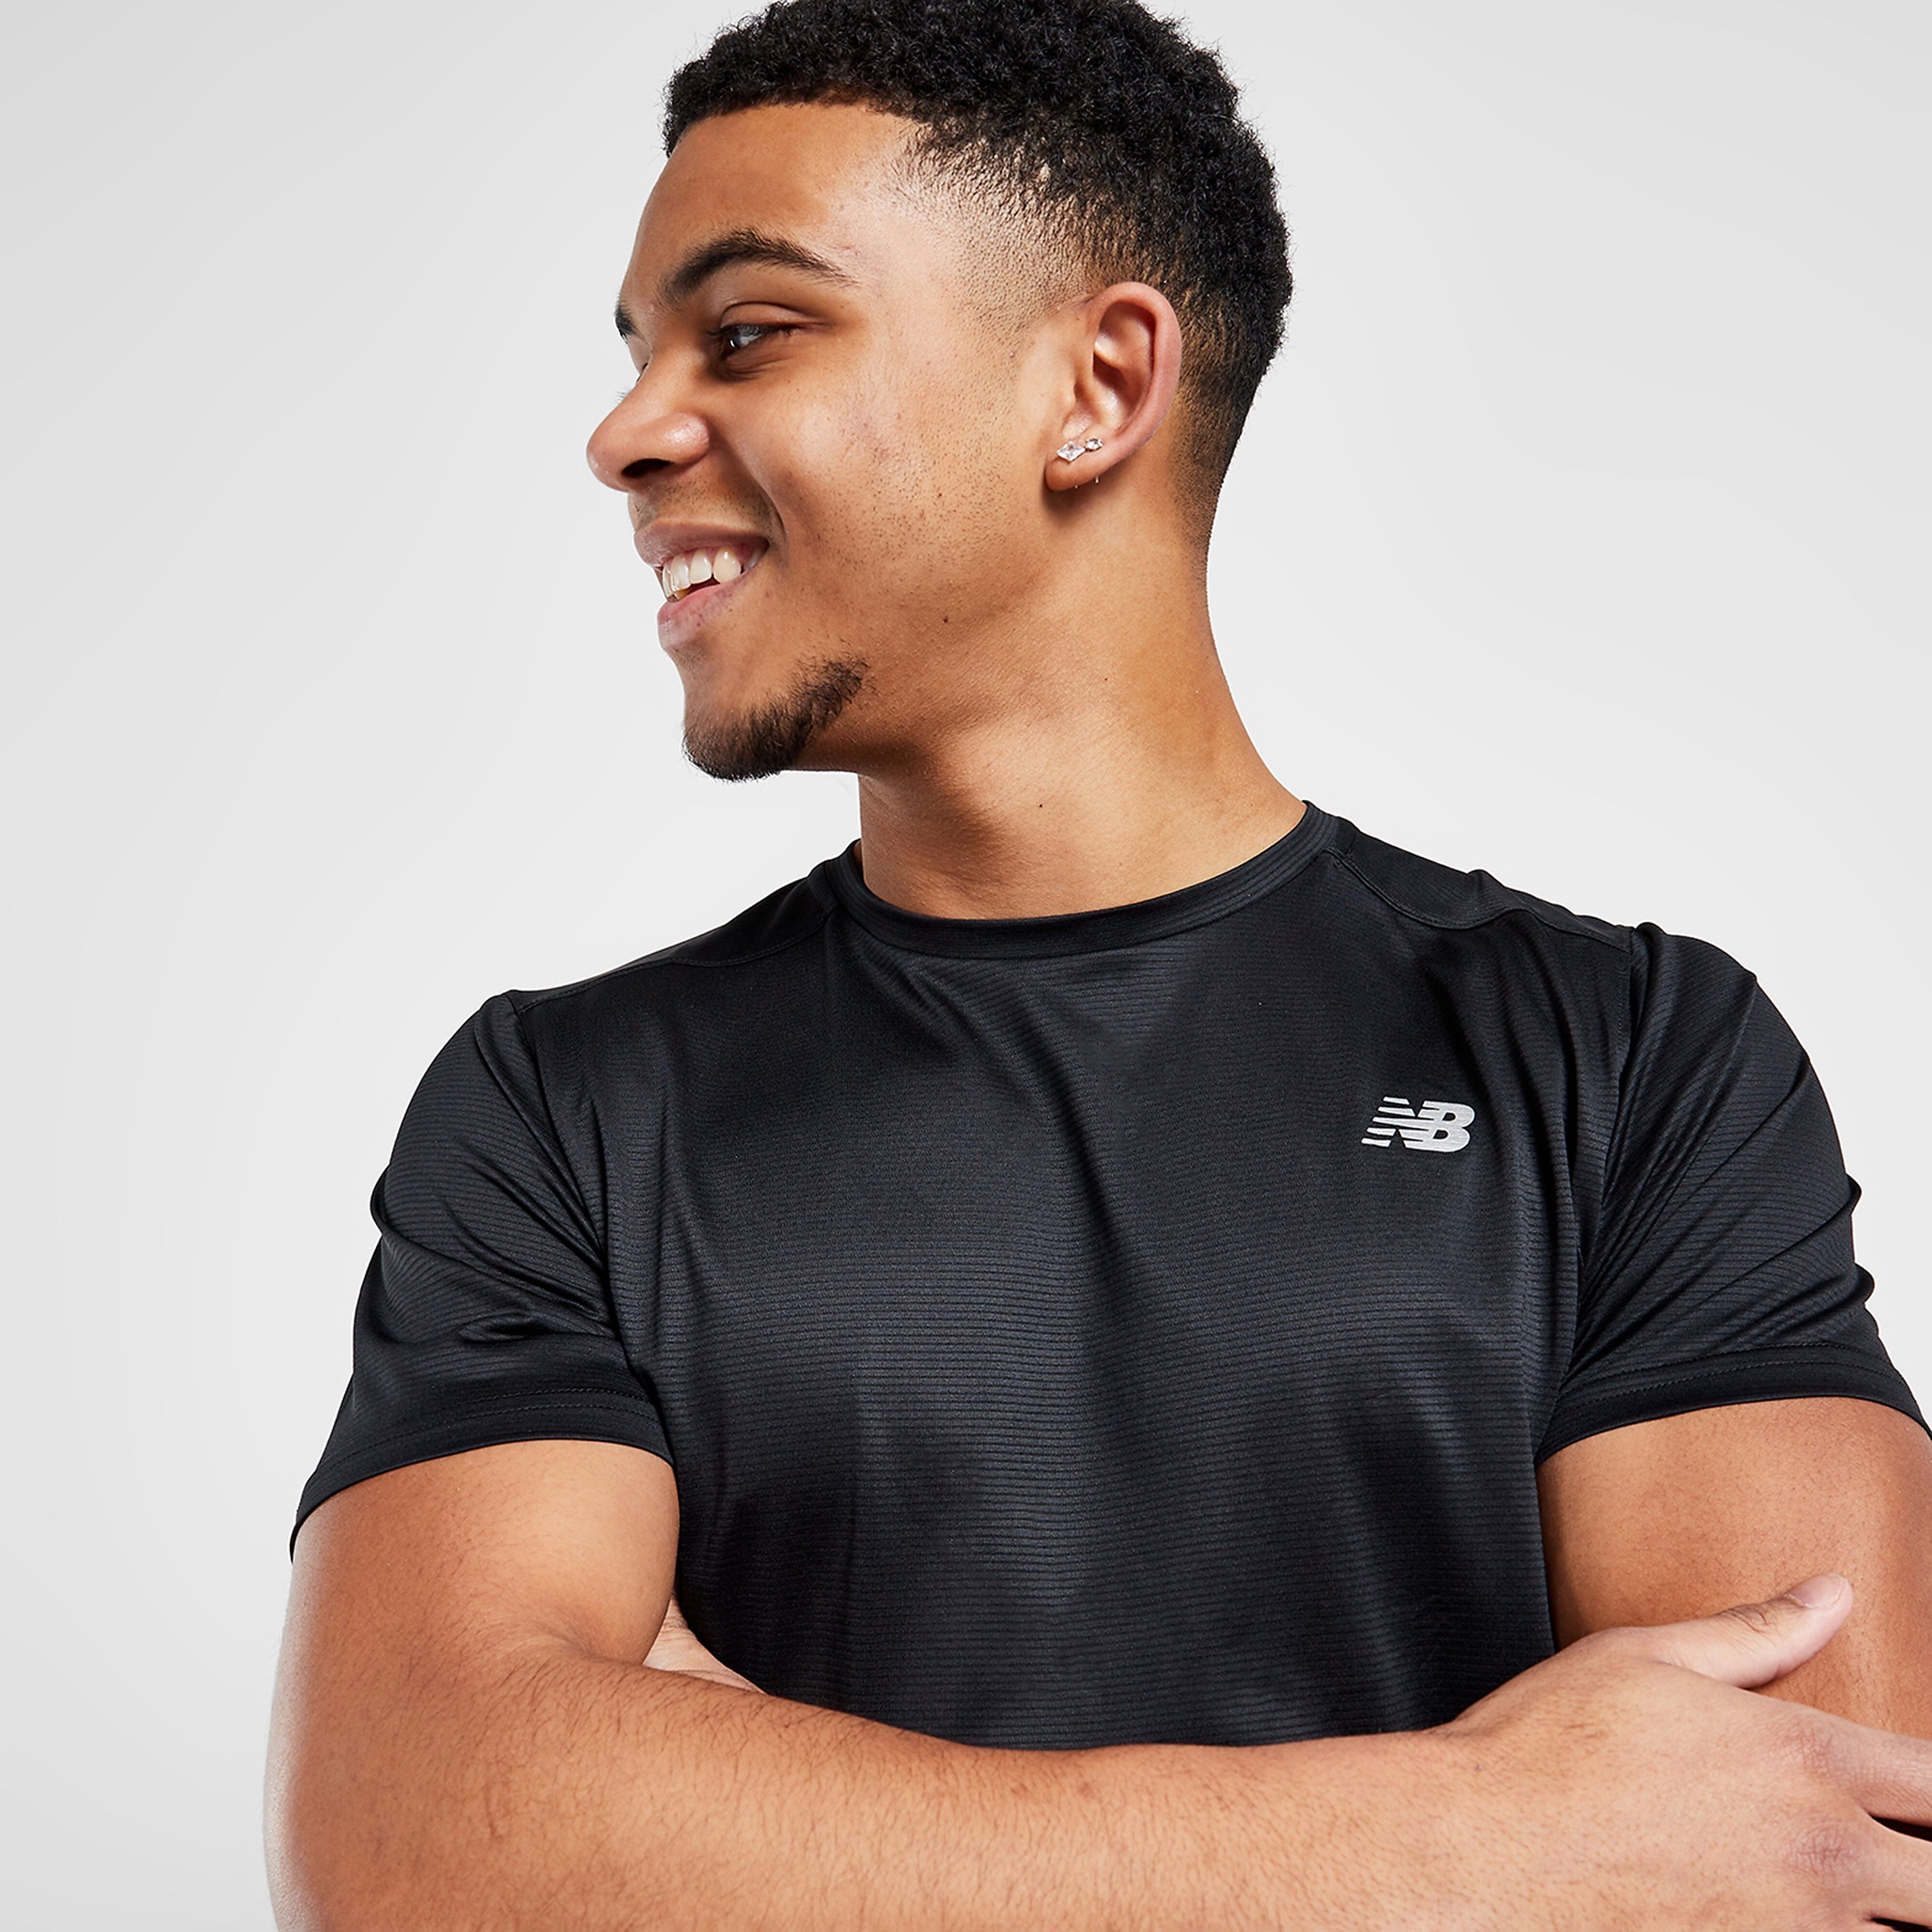 New Balance Accelerate T-shirt - Black - Mens  size: S